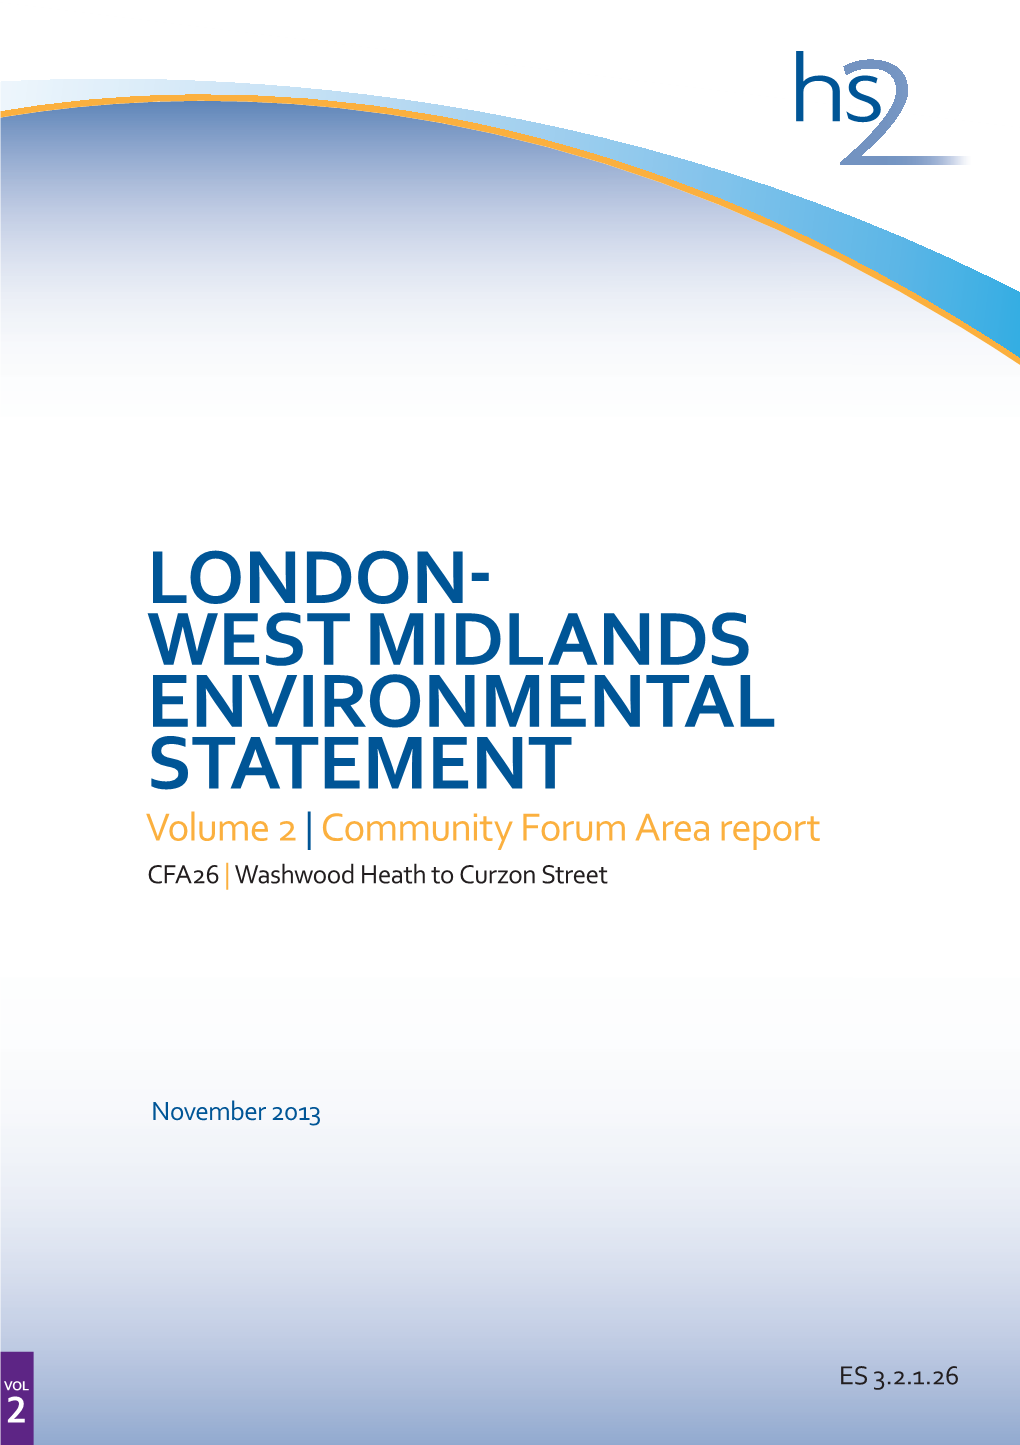 London- West Midlands ENVIRONMENTAL STATEMENT Volume 2 | Community Forum Area Report CFA26 | Washwood Heath to Curzon Street